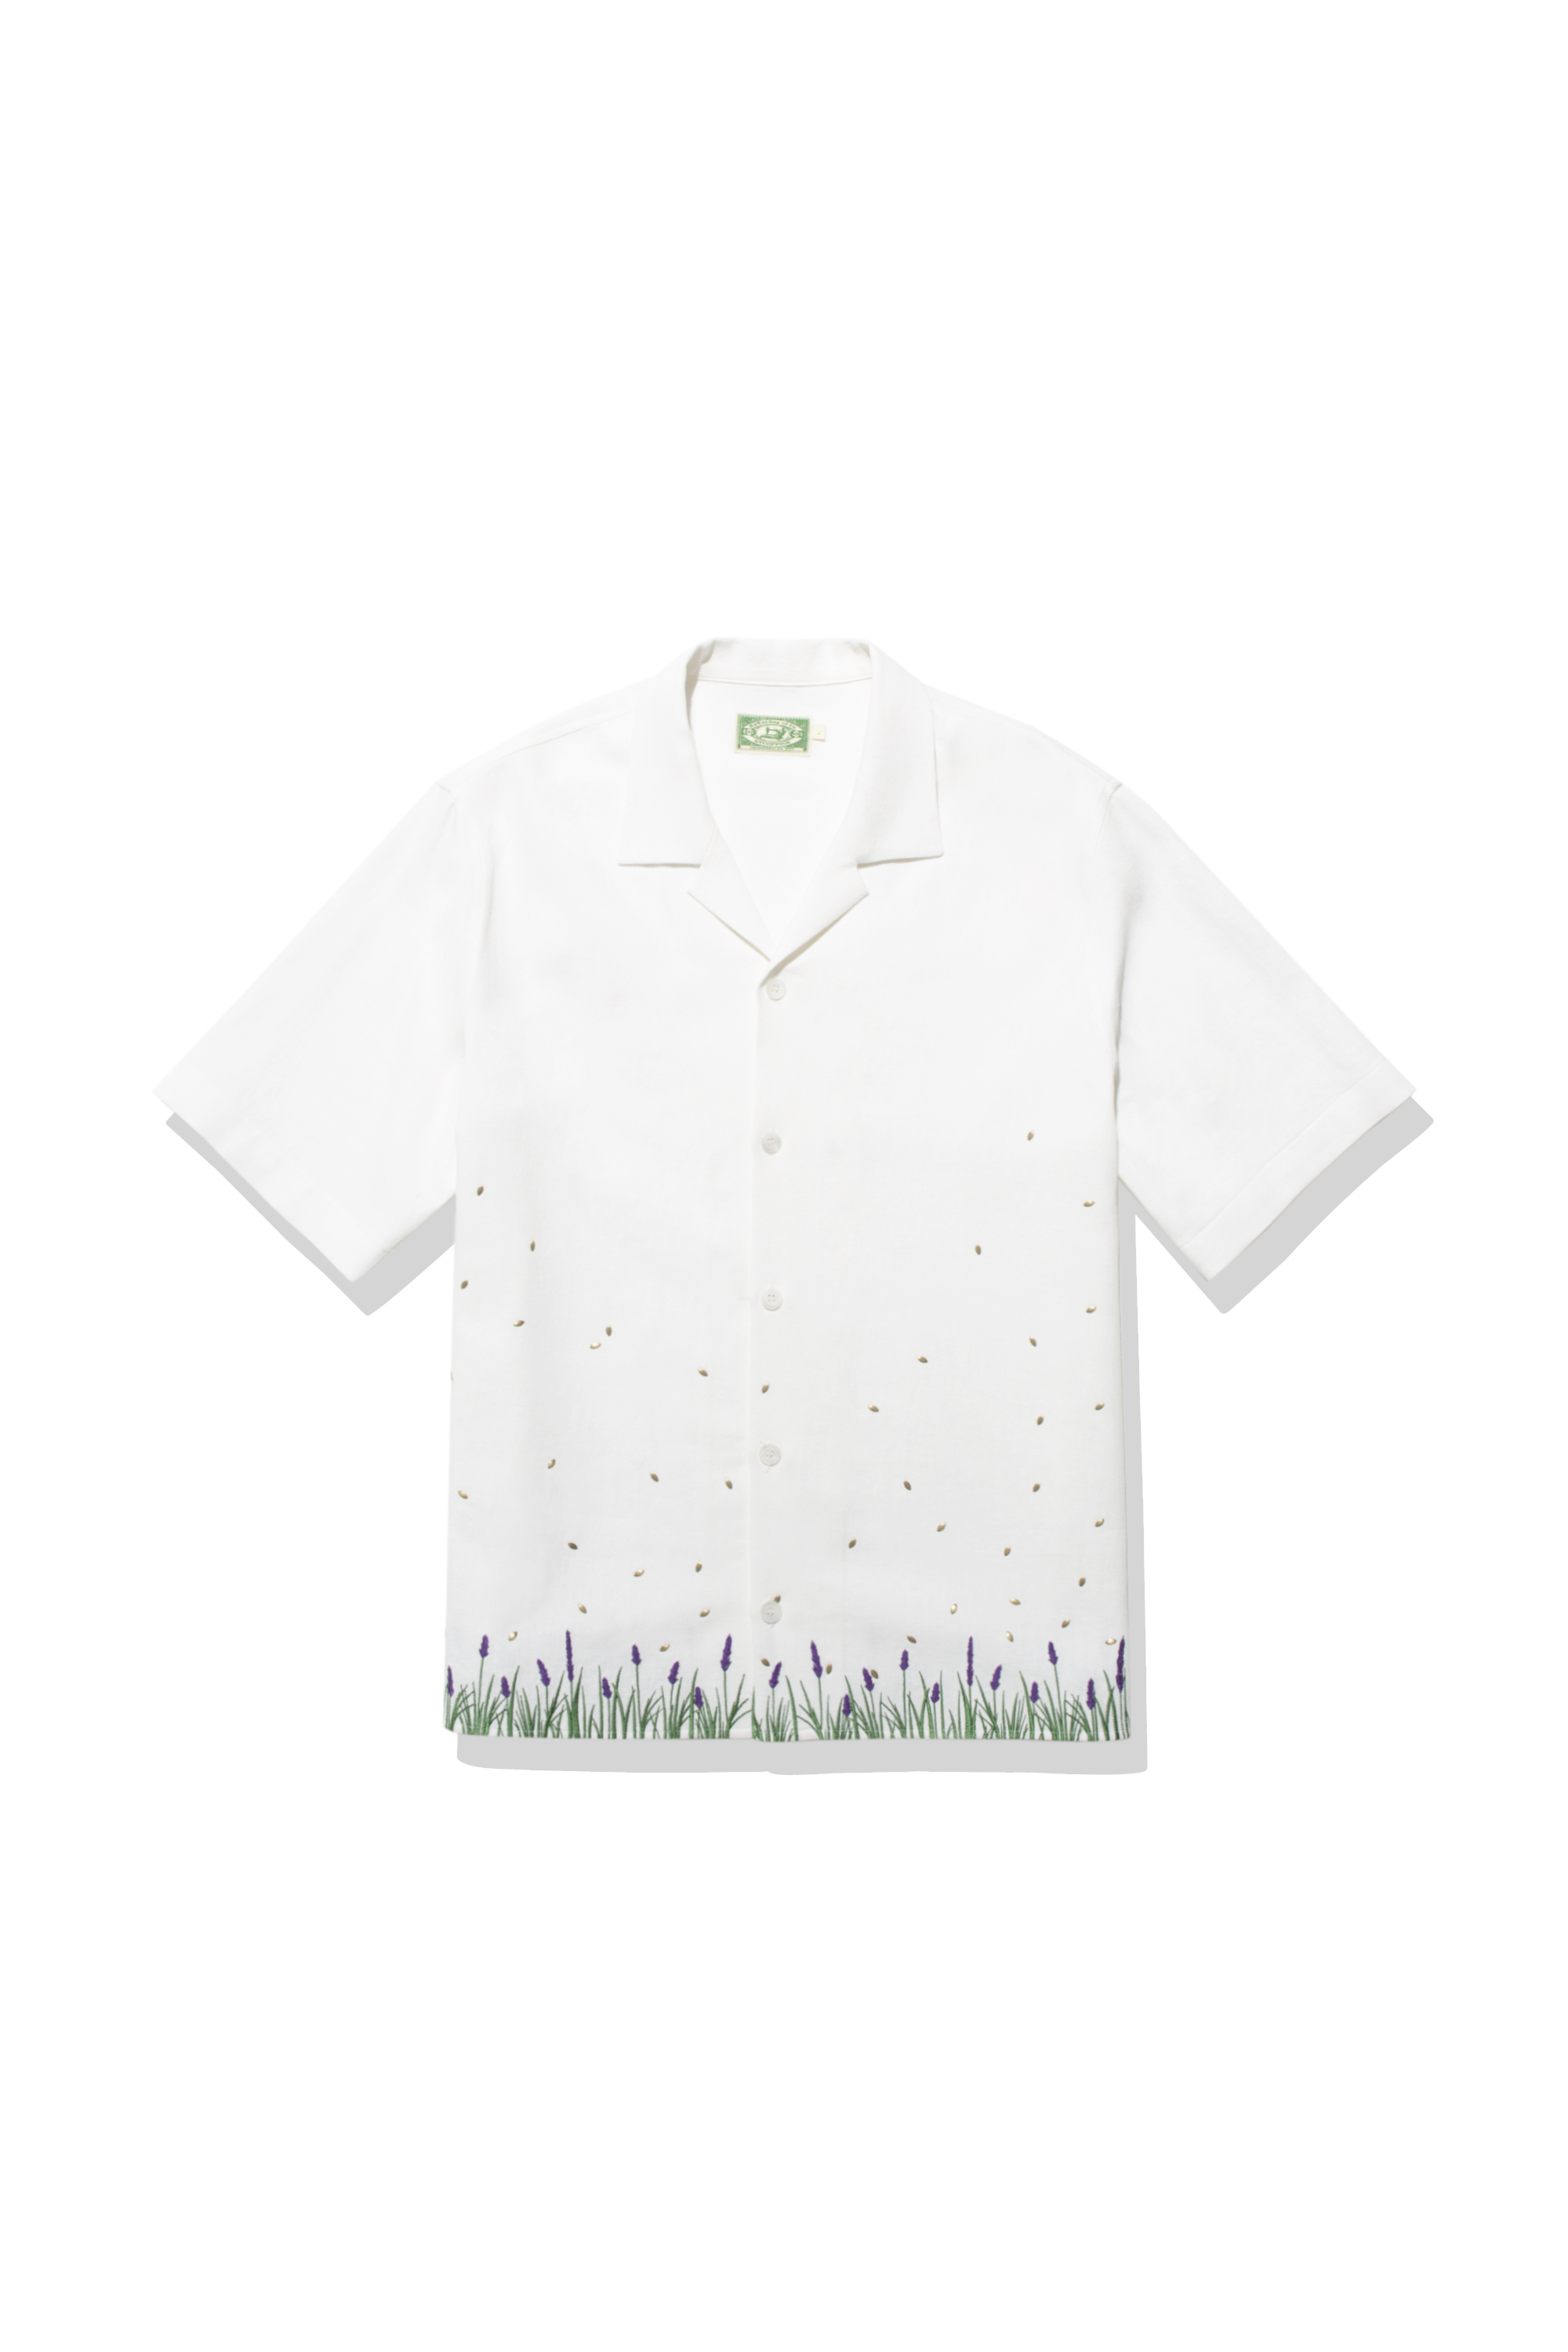 Lavender Embroidery Beads Shirt White (6월 16일 순차 발송)